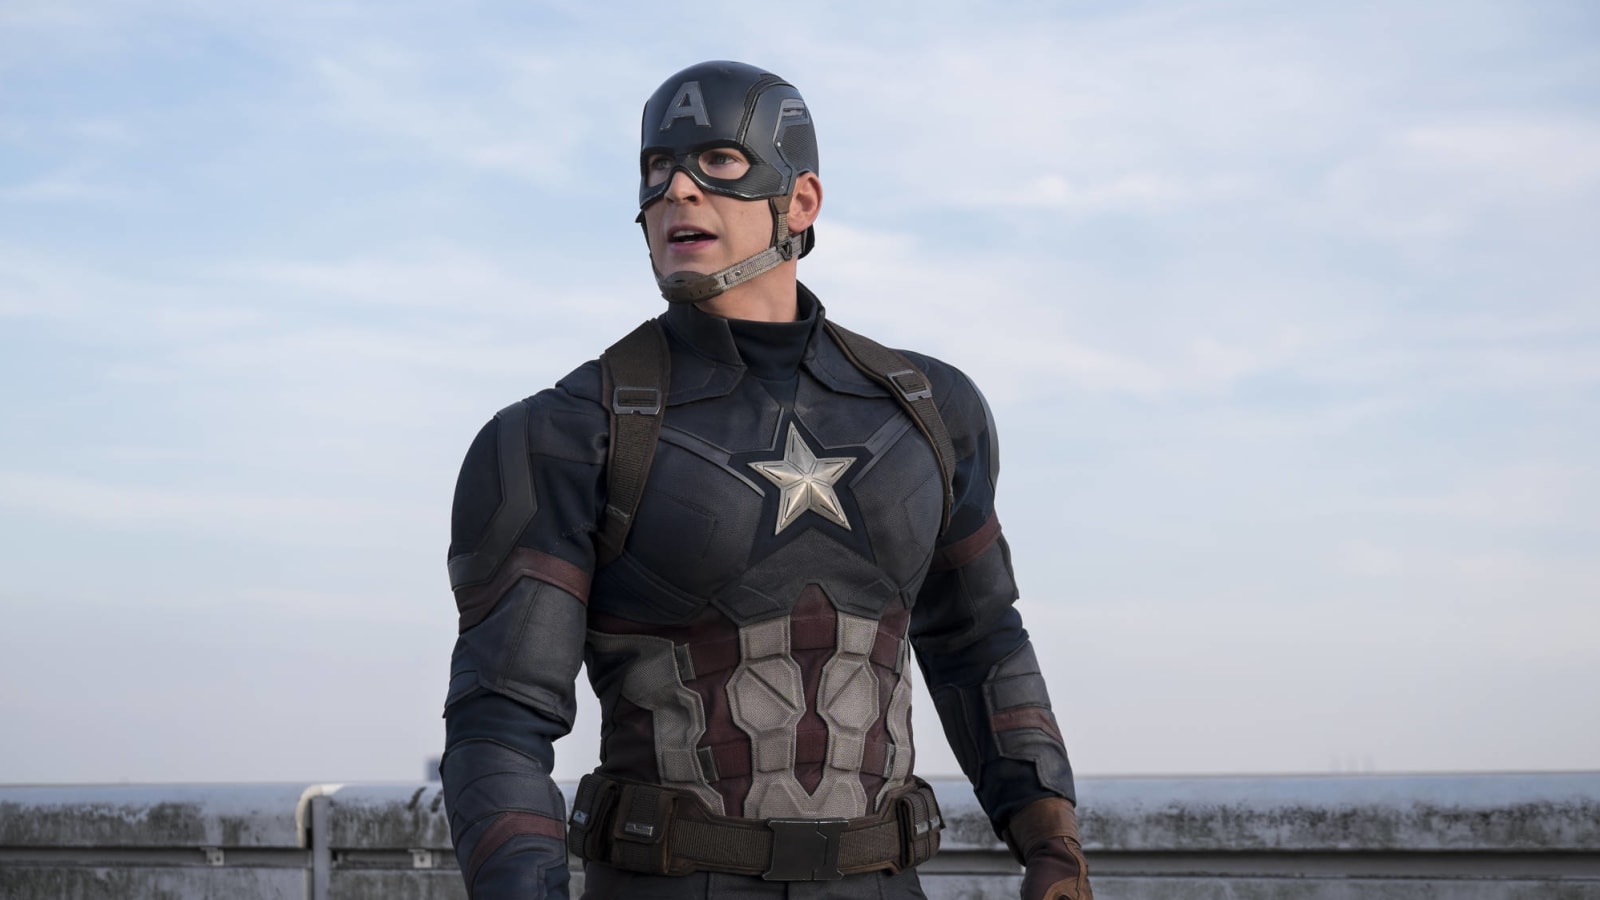 Marvel boss confirms Chris Evans will not reprise Captain America role